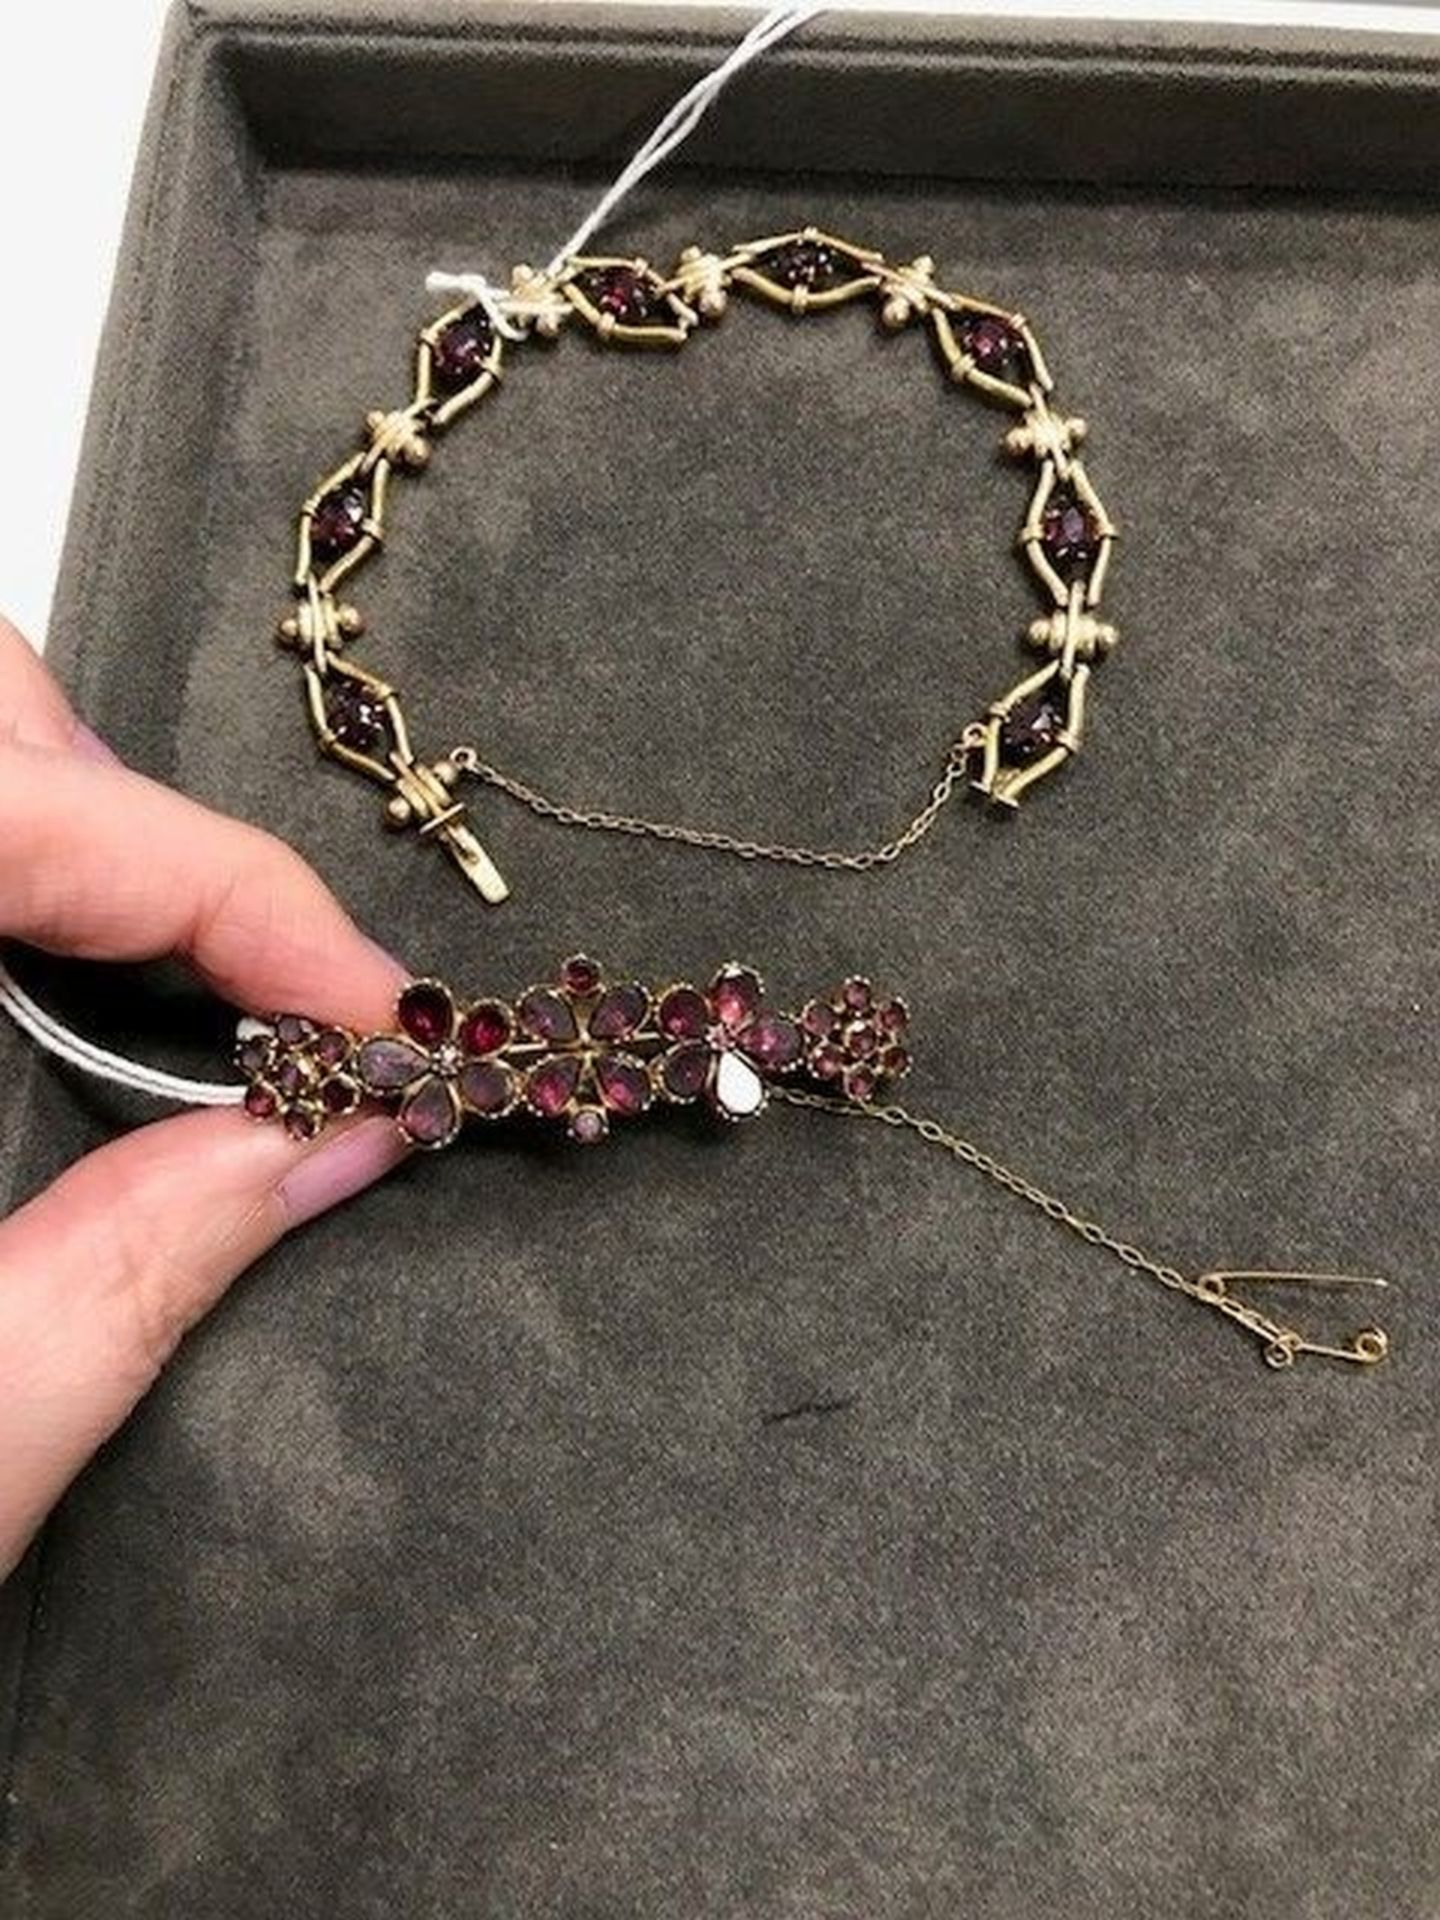 A garnet brooch and bracelet